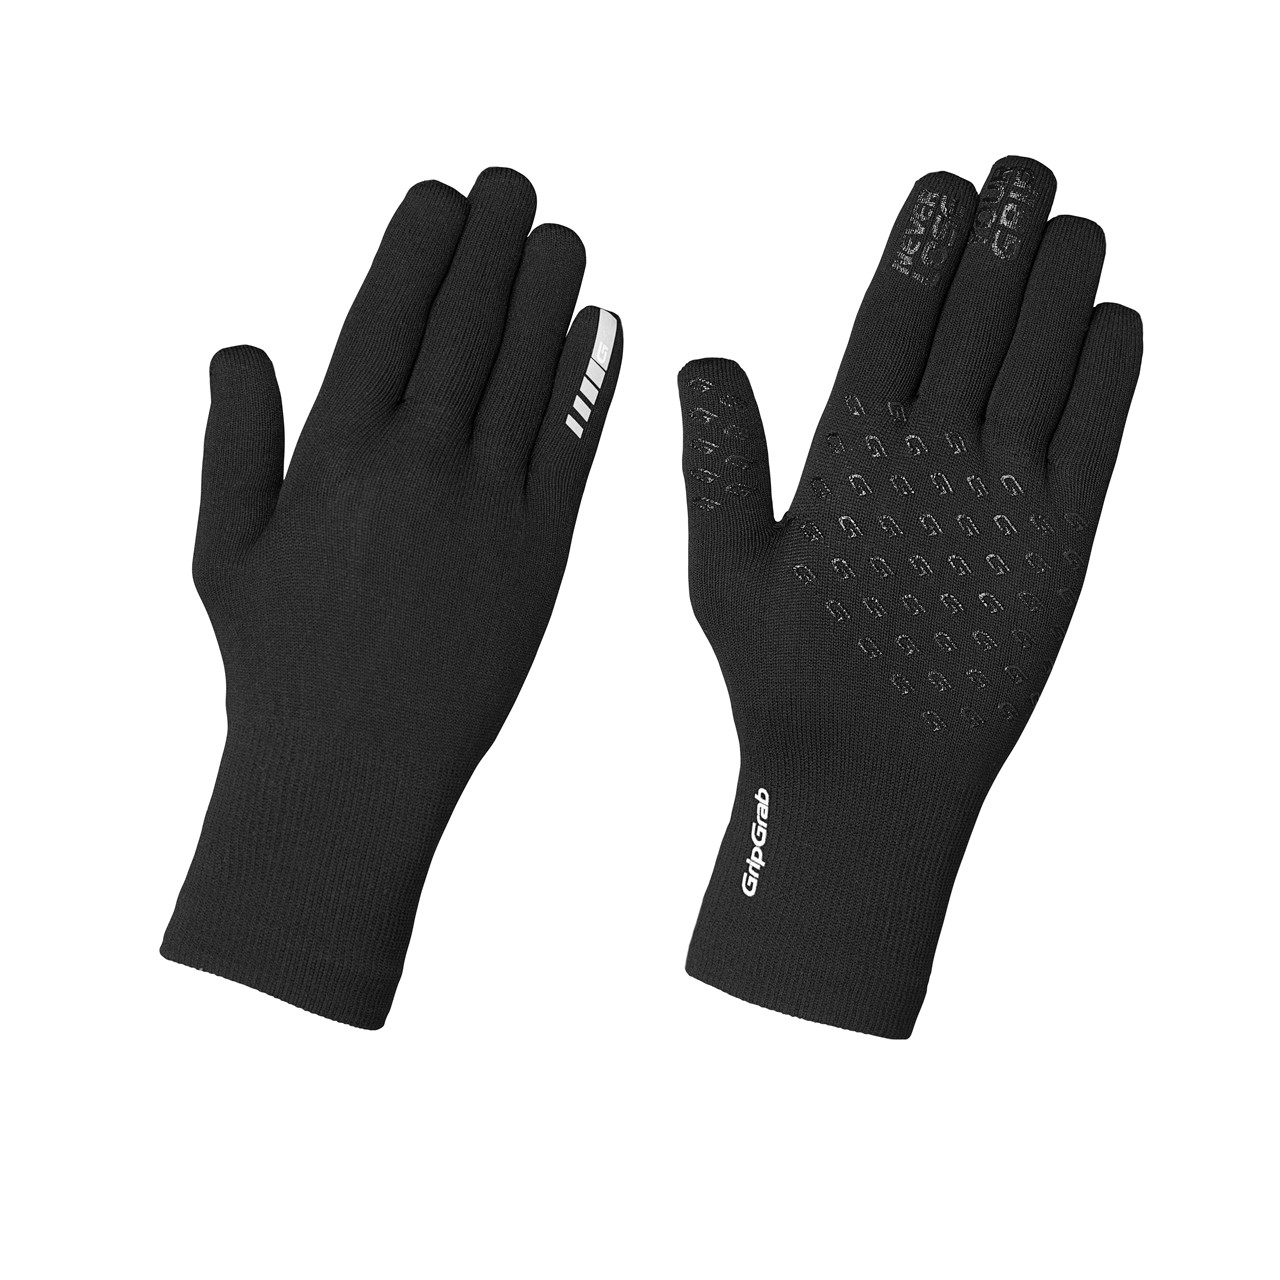 GripGrab Waterproof Knitted Thermal Glove - Vandtætte vinterhandsker - Sort - Str. XL/XXL